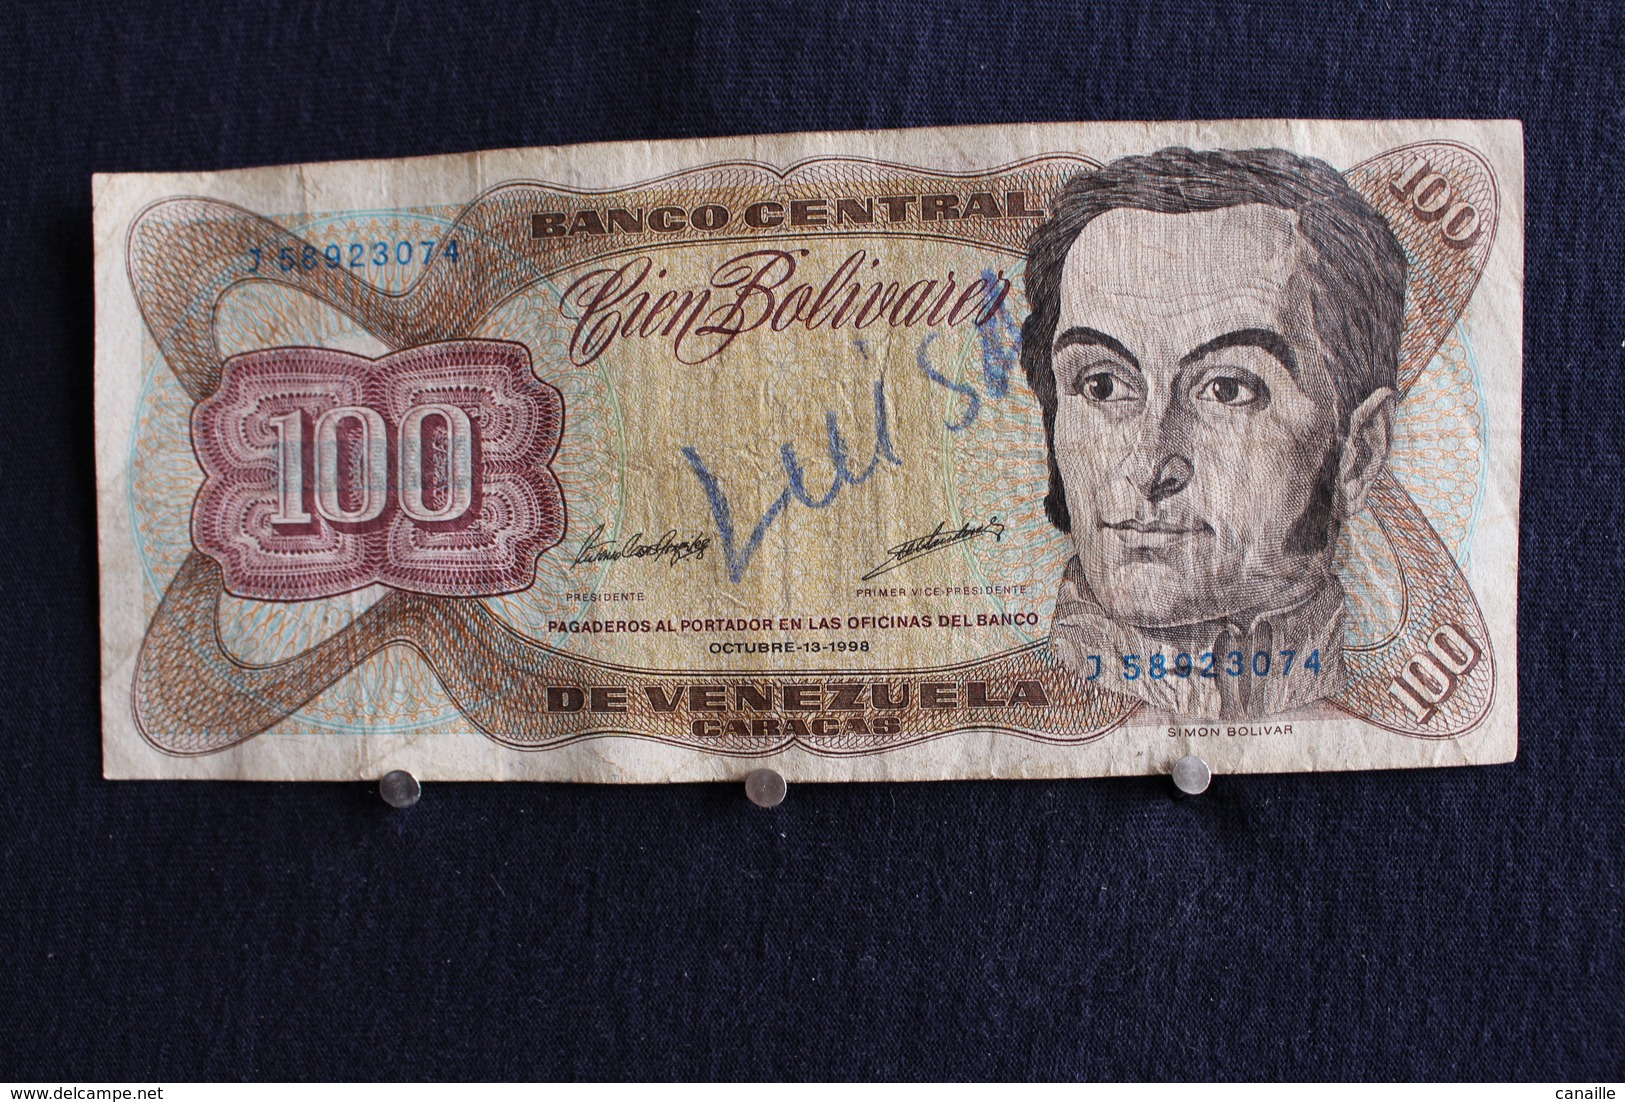 24 / Banco Central De La Venezuela - 100 - Cien Bolivares - 18 . Octobre . 1998  / N° J 58923074 - Venezuela